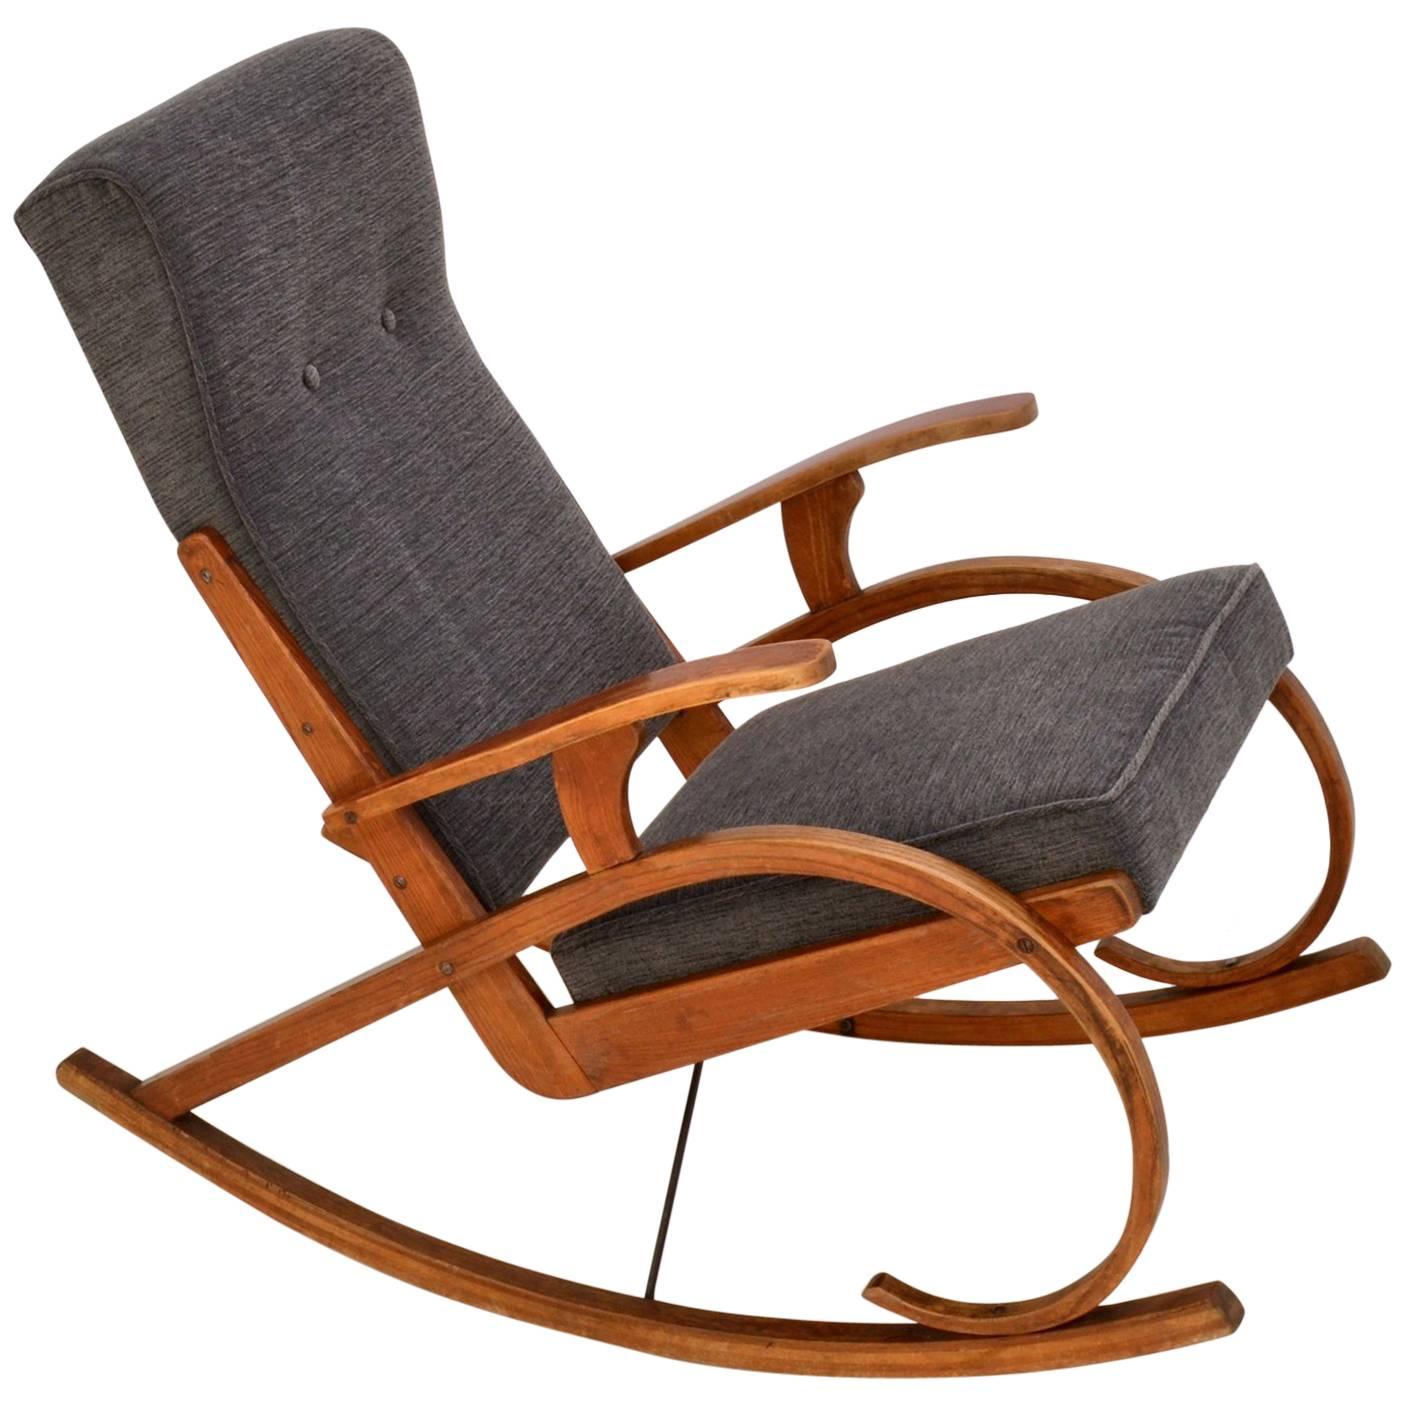  1930's Strong Modernist Design Czech Rocking Chair in Bentwood